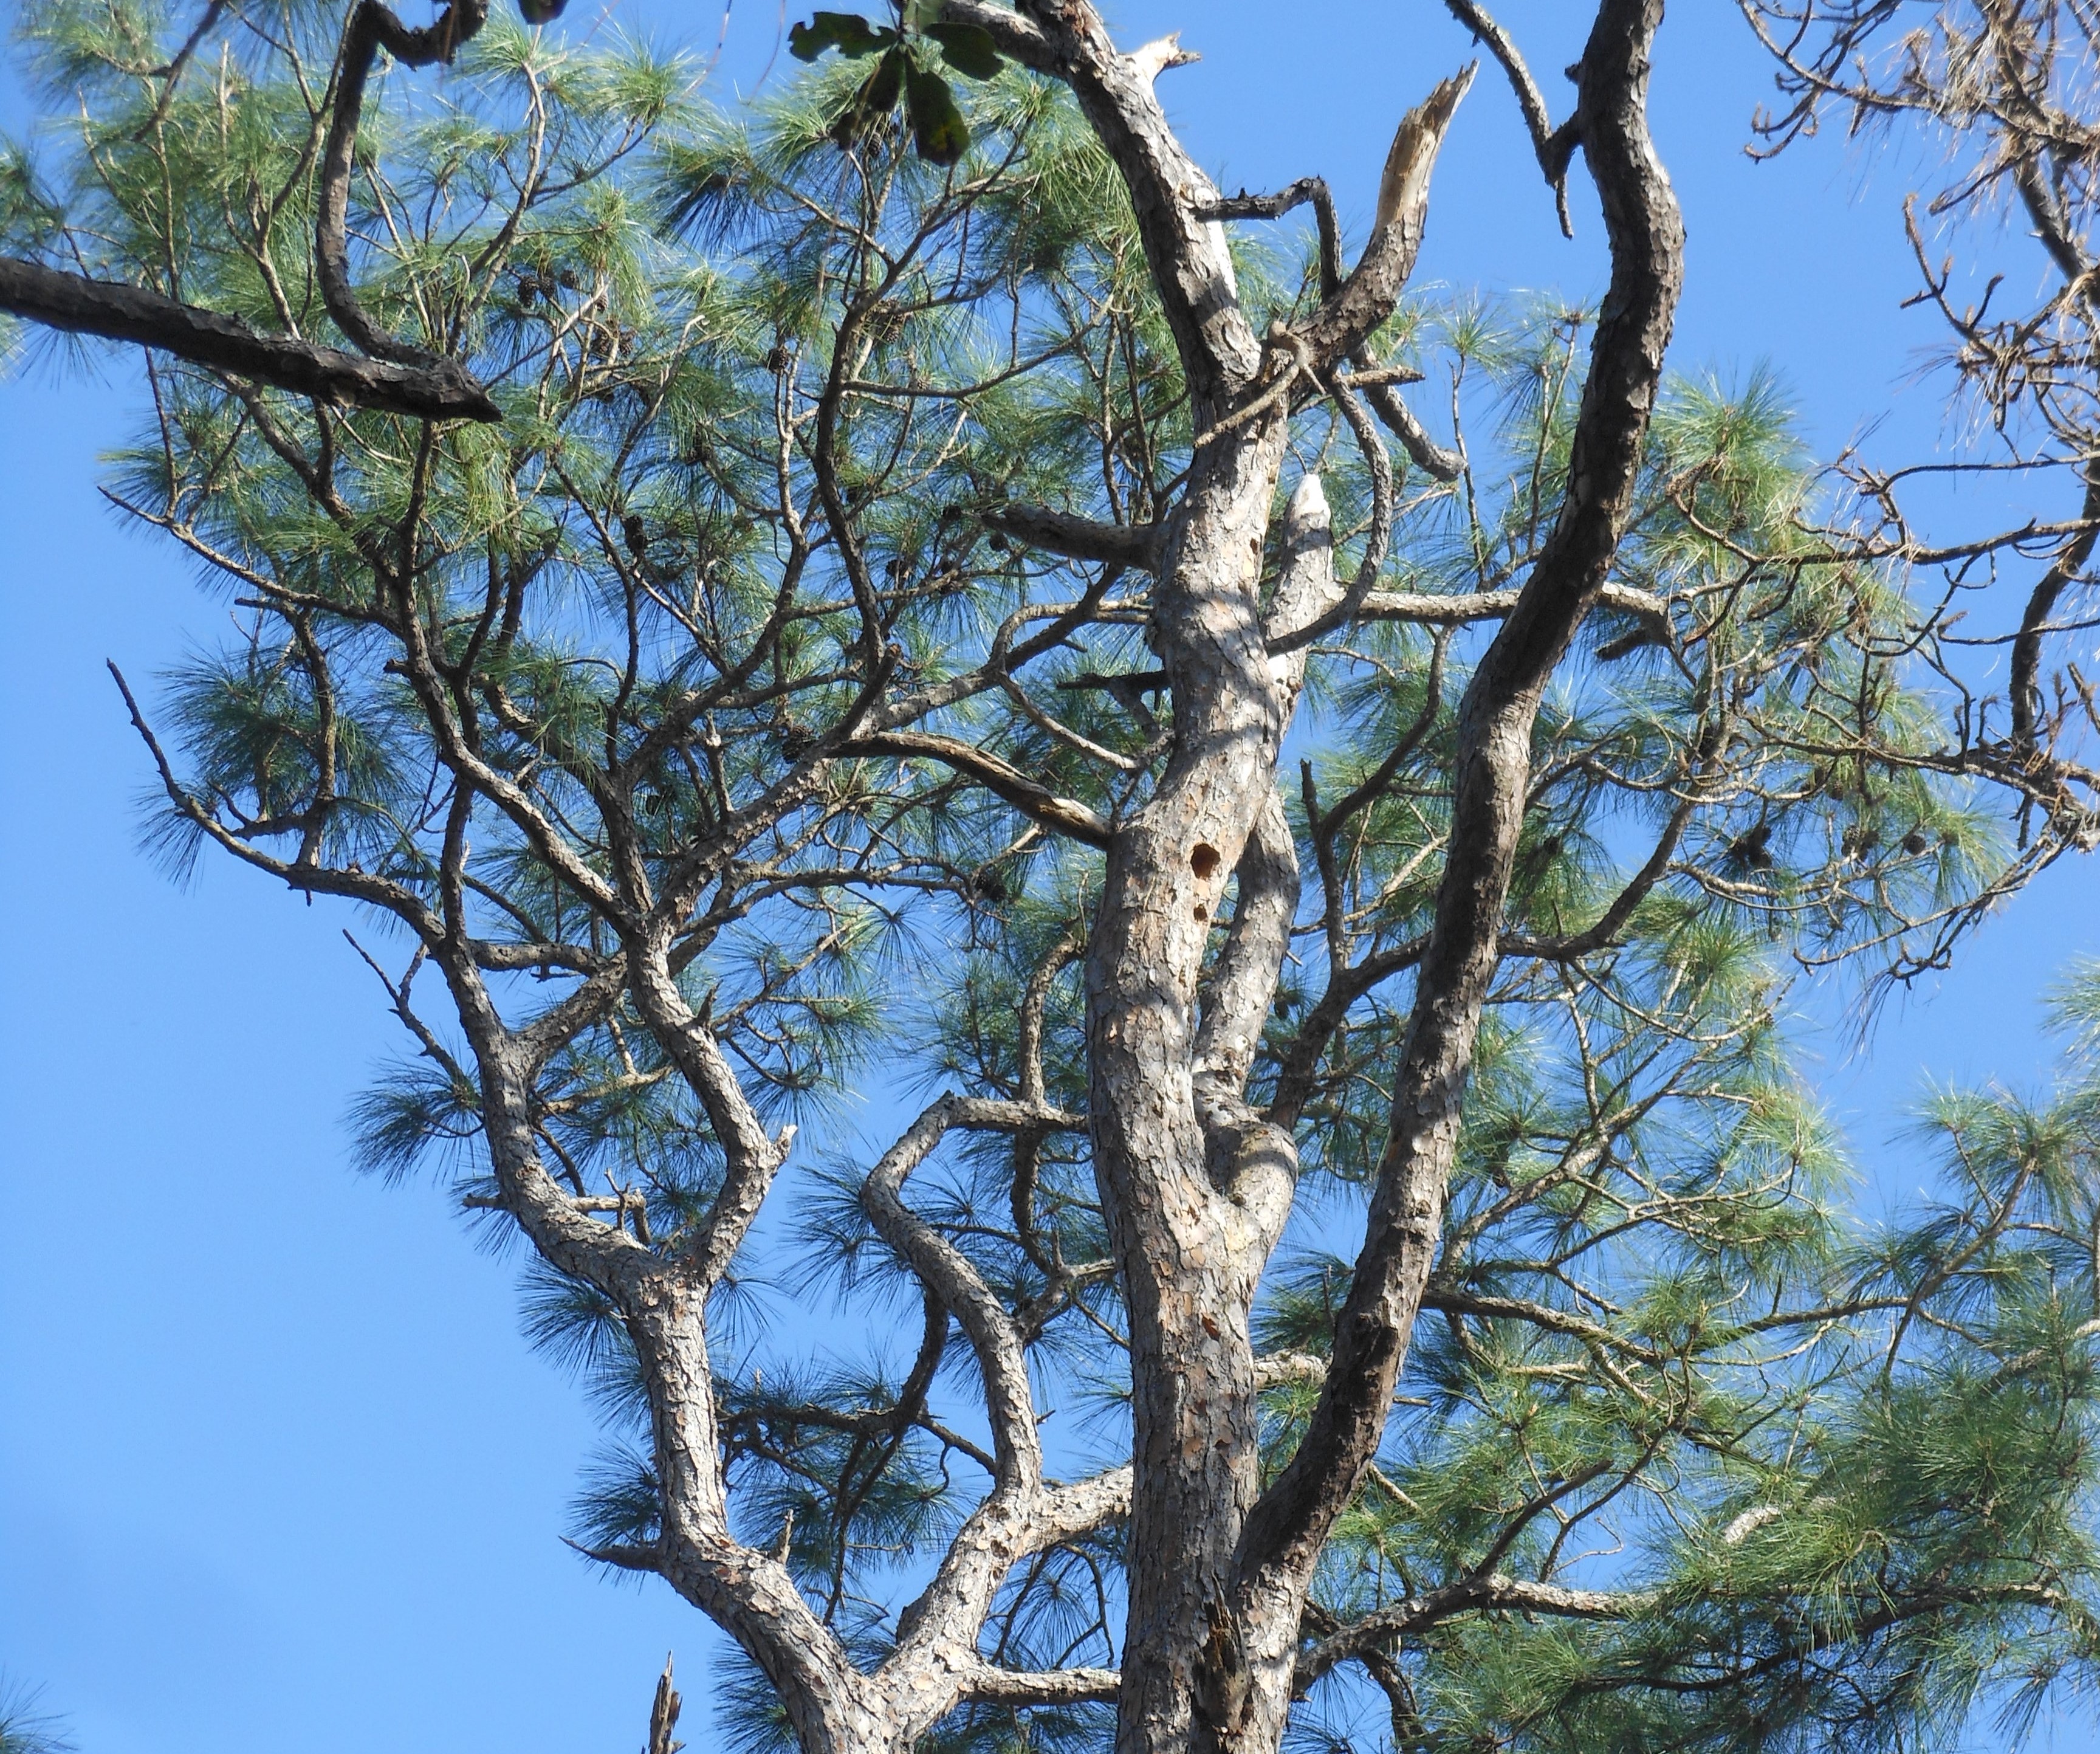 Woodpecker cavity in a tall pine tree